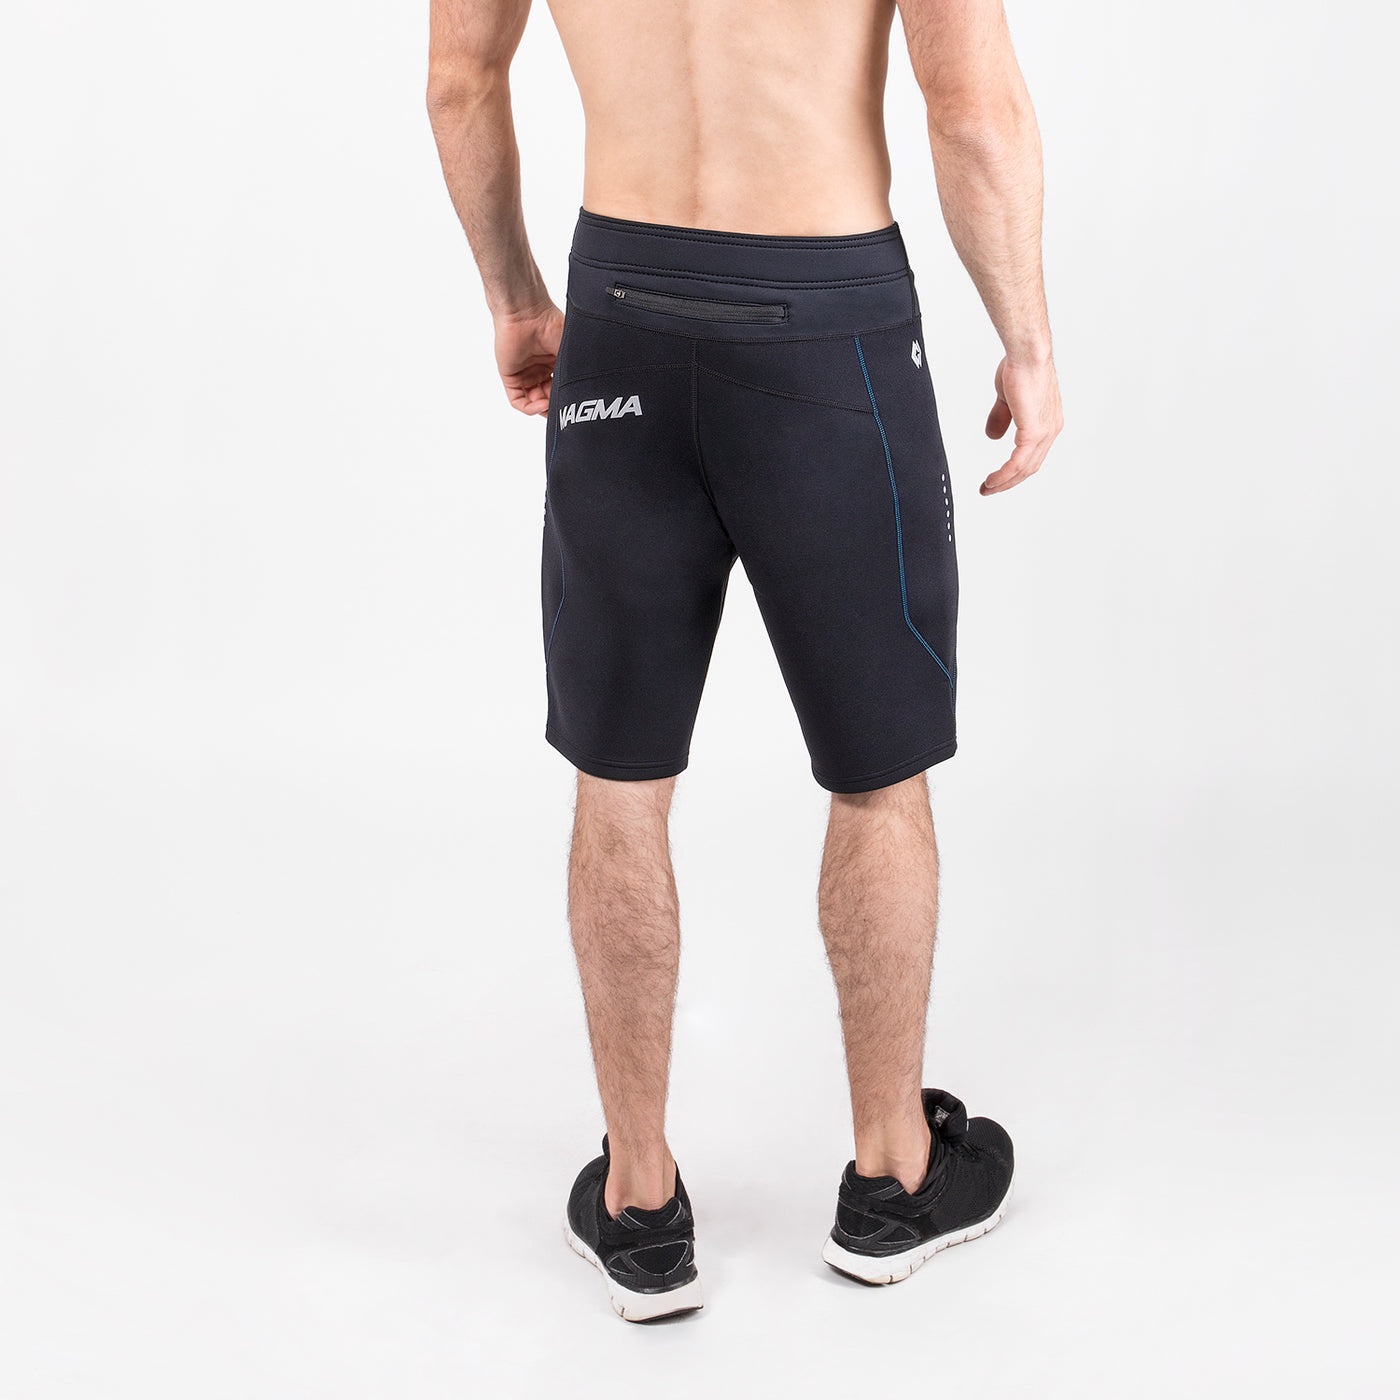 NonZero Gravity Men’s Sauna Shorts – Shop709.com